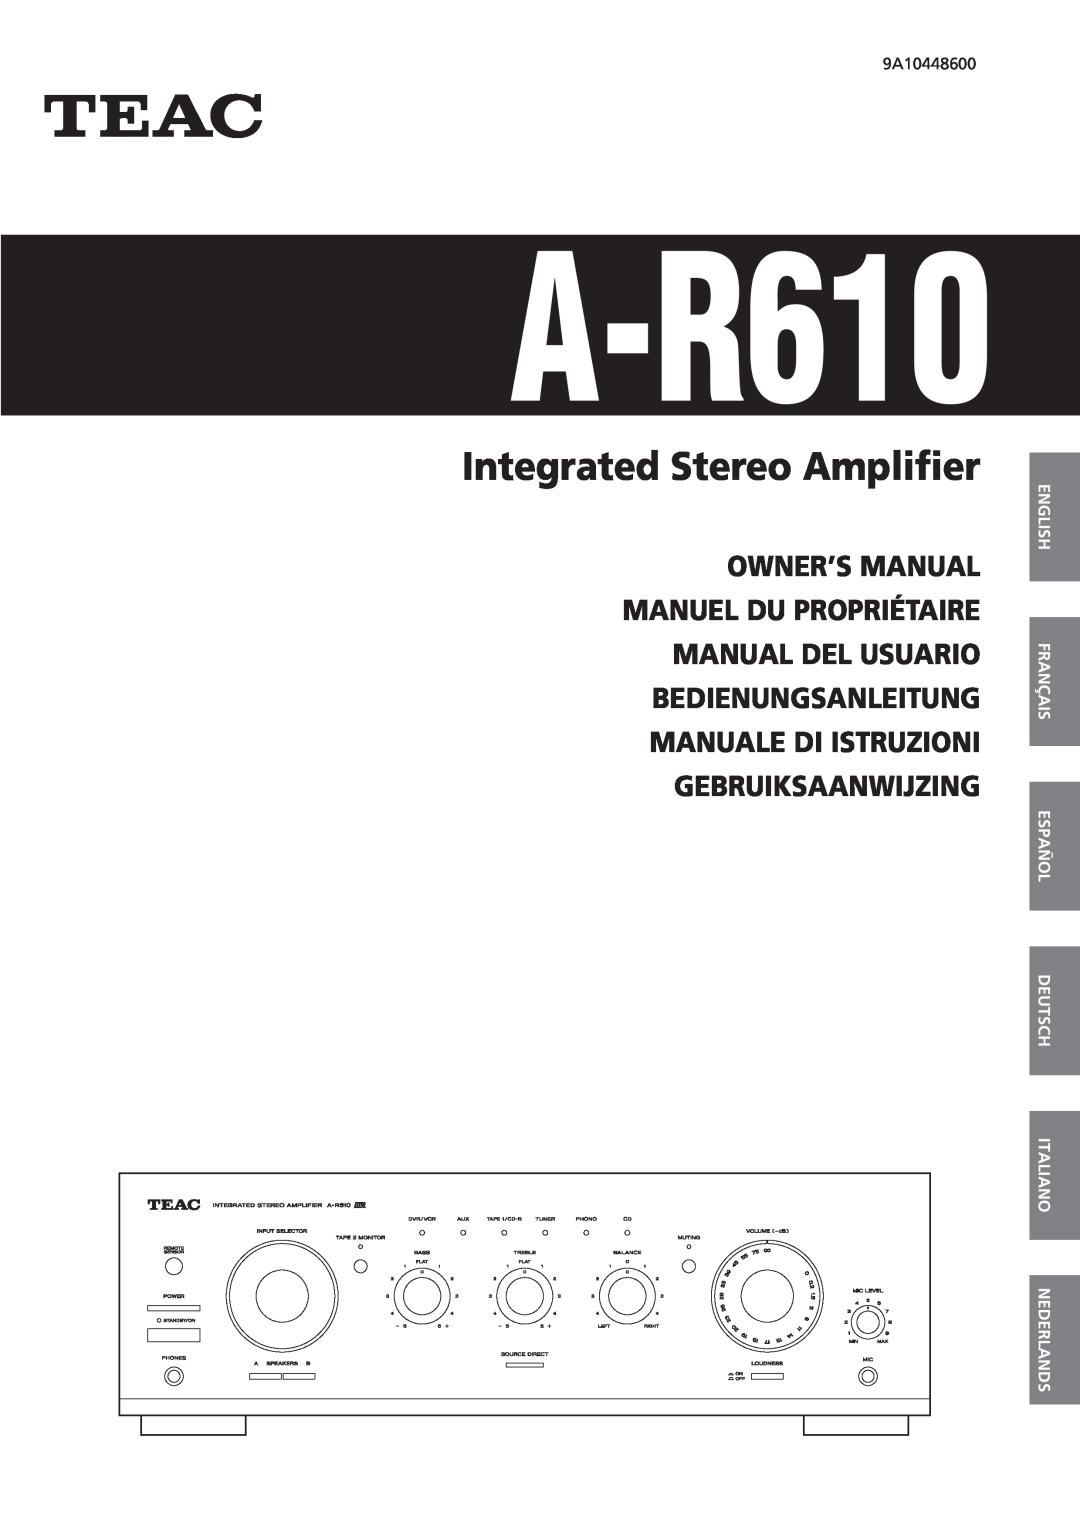 Teac A-R610 owner manual English Français Español Deutsch Italiano, Nederlands, Integrated Stereo Amplifier 